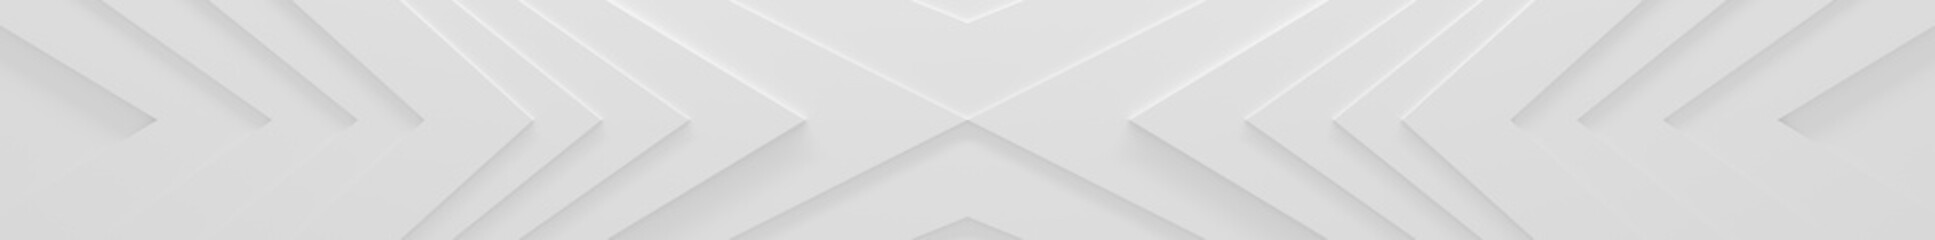 Wide White Geometric Background (Website Head) (3D Illustration)